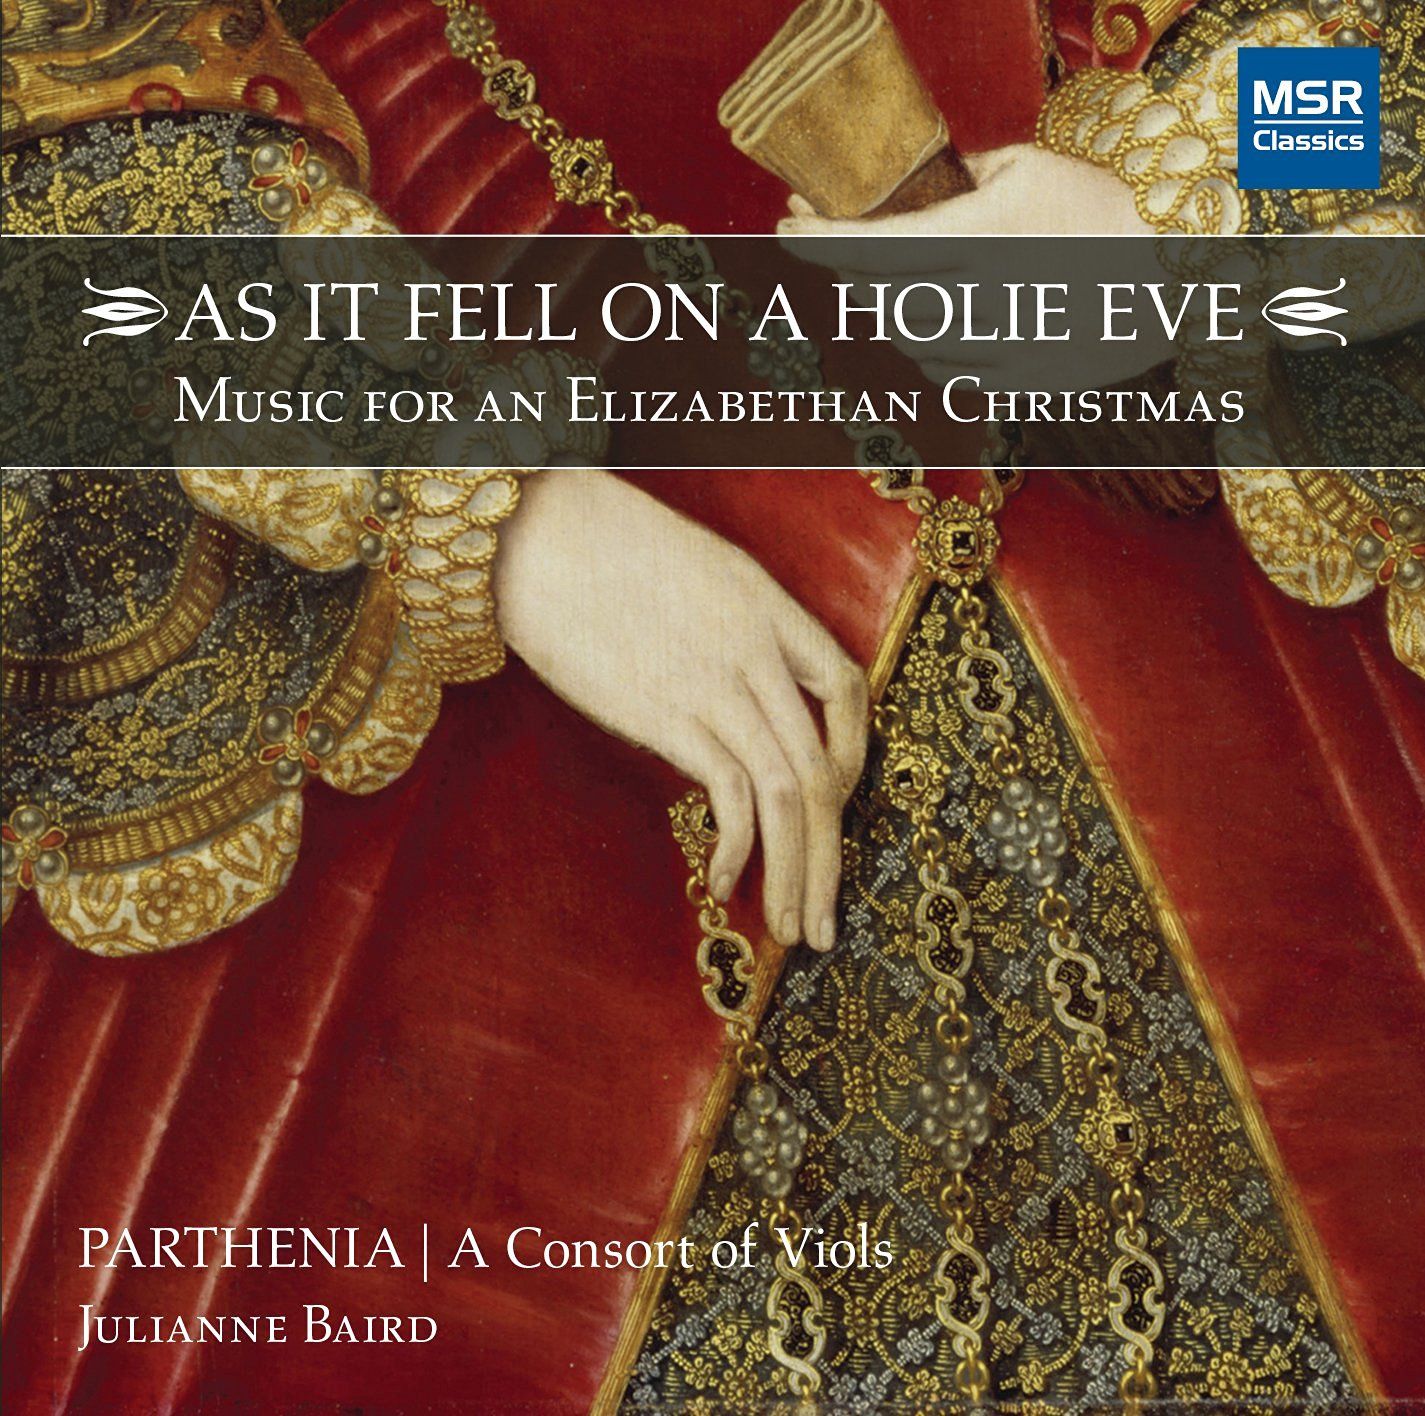 Parthenia - AS IT FELL ON A HOLIE EVE - Music for an Elizabethan Christmas